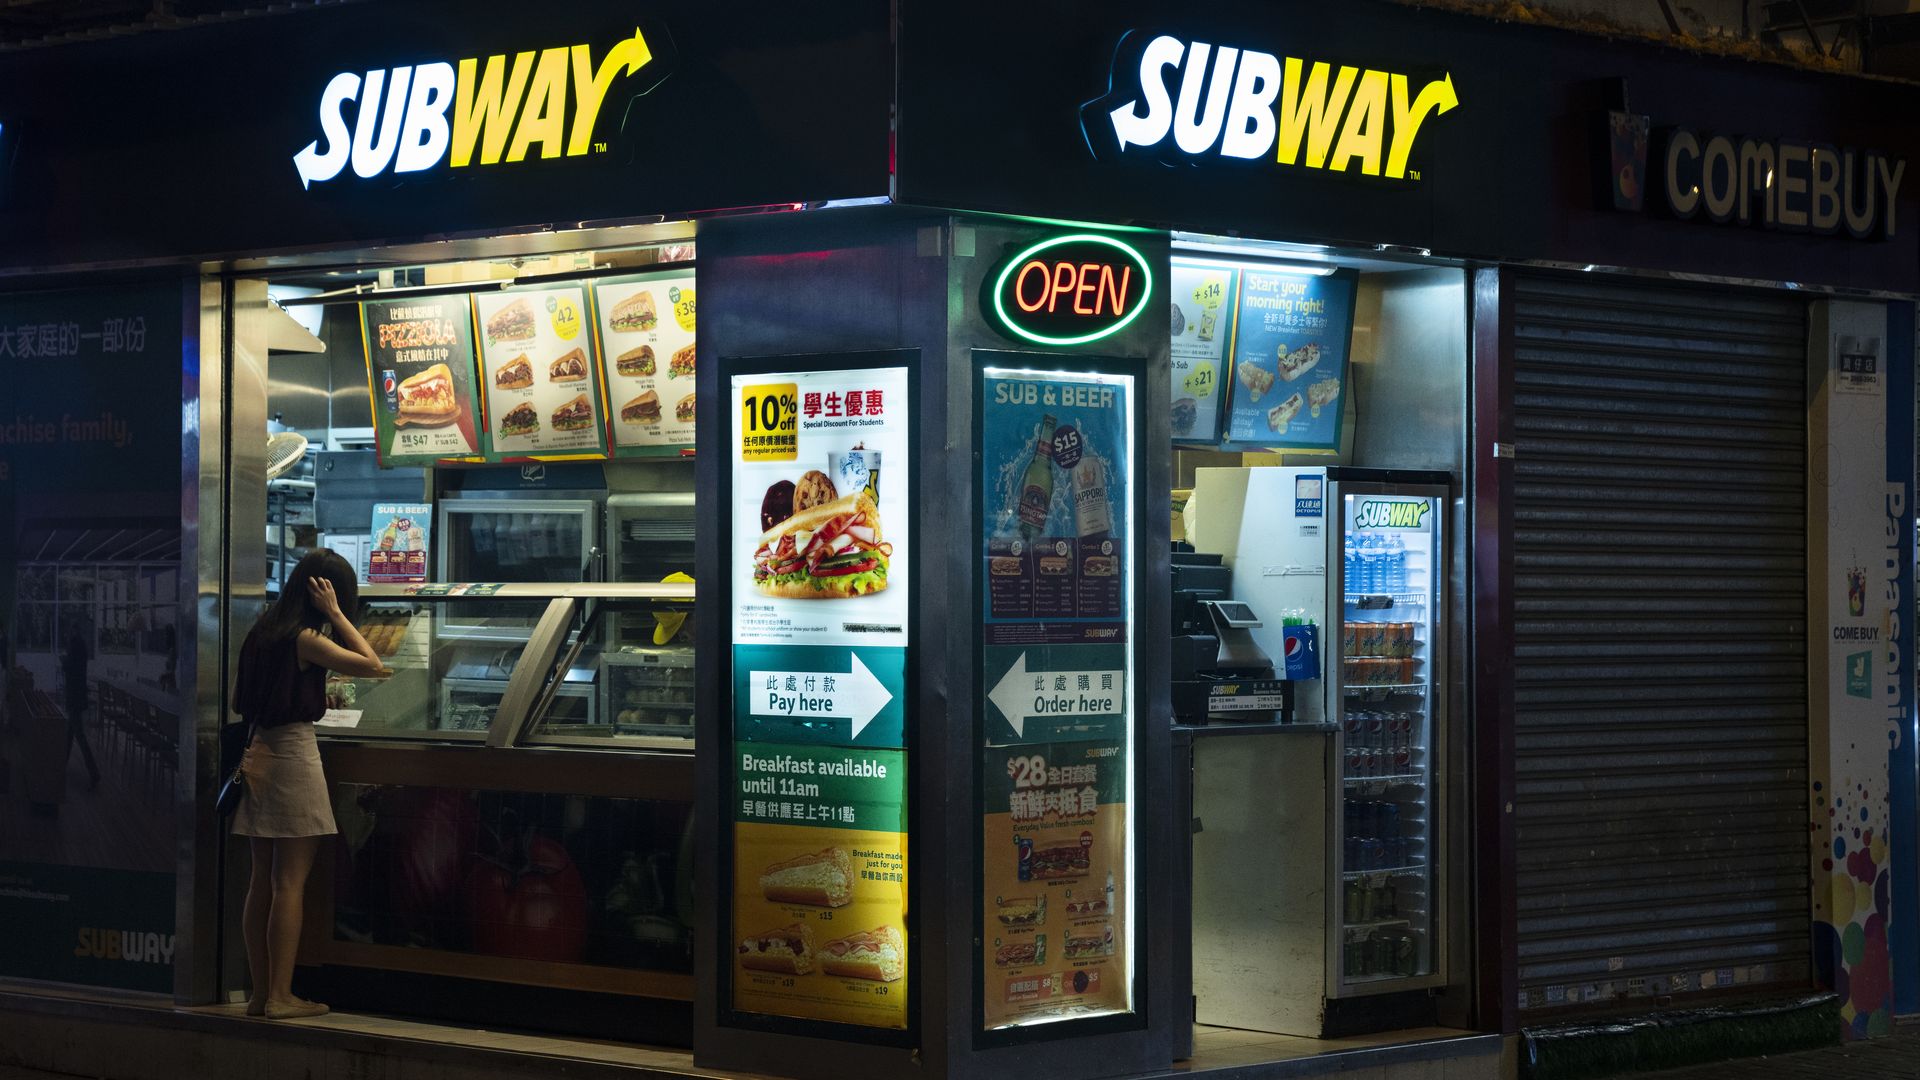 A Subway sandwich restaurant location.